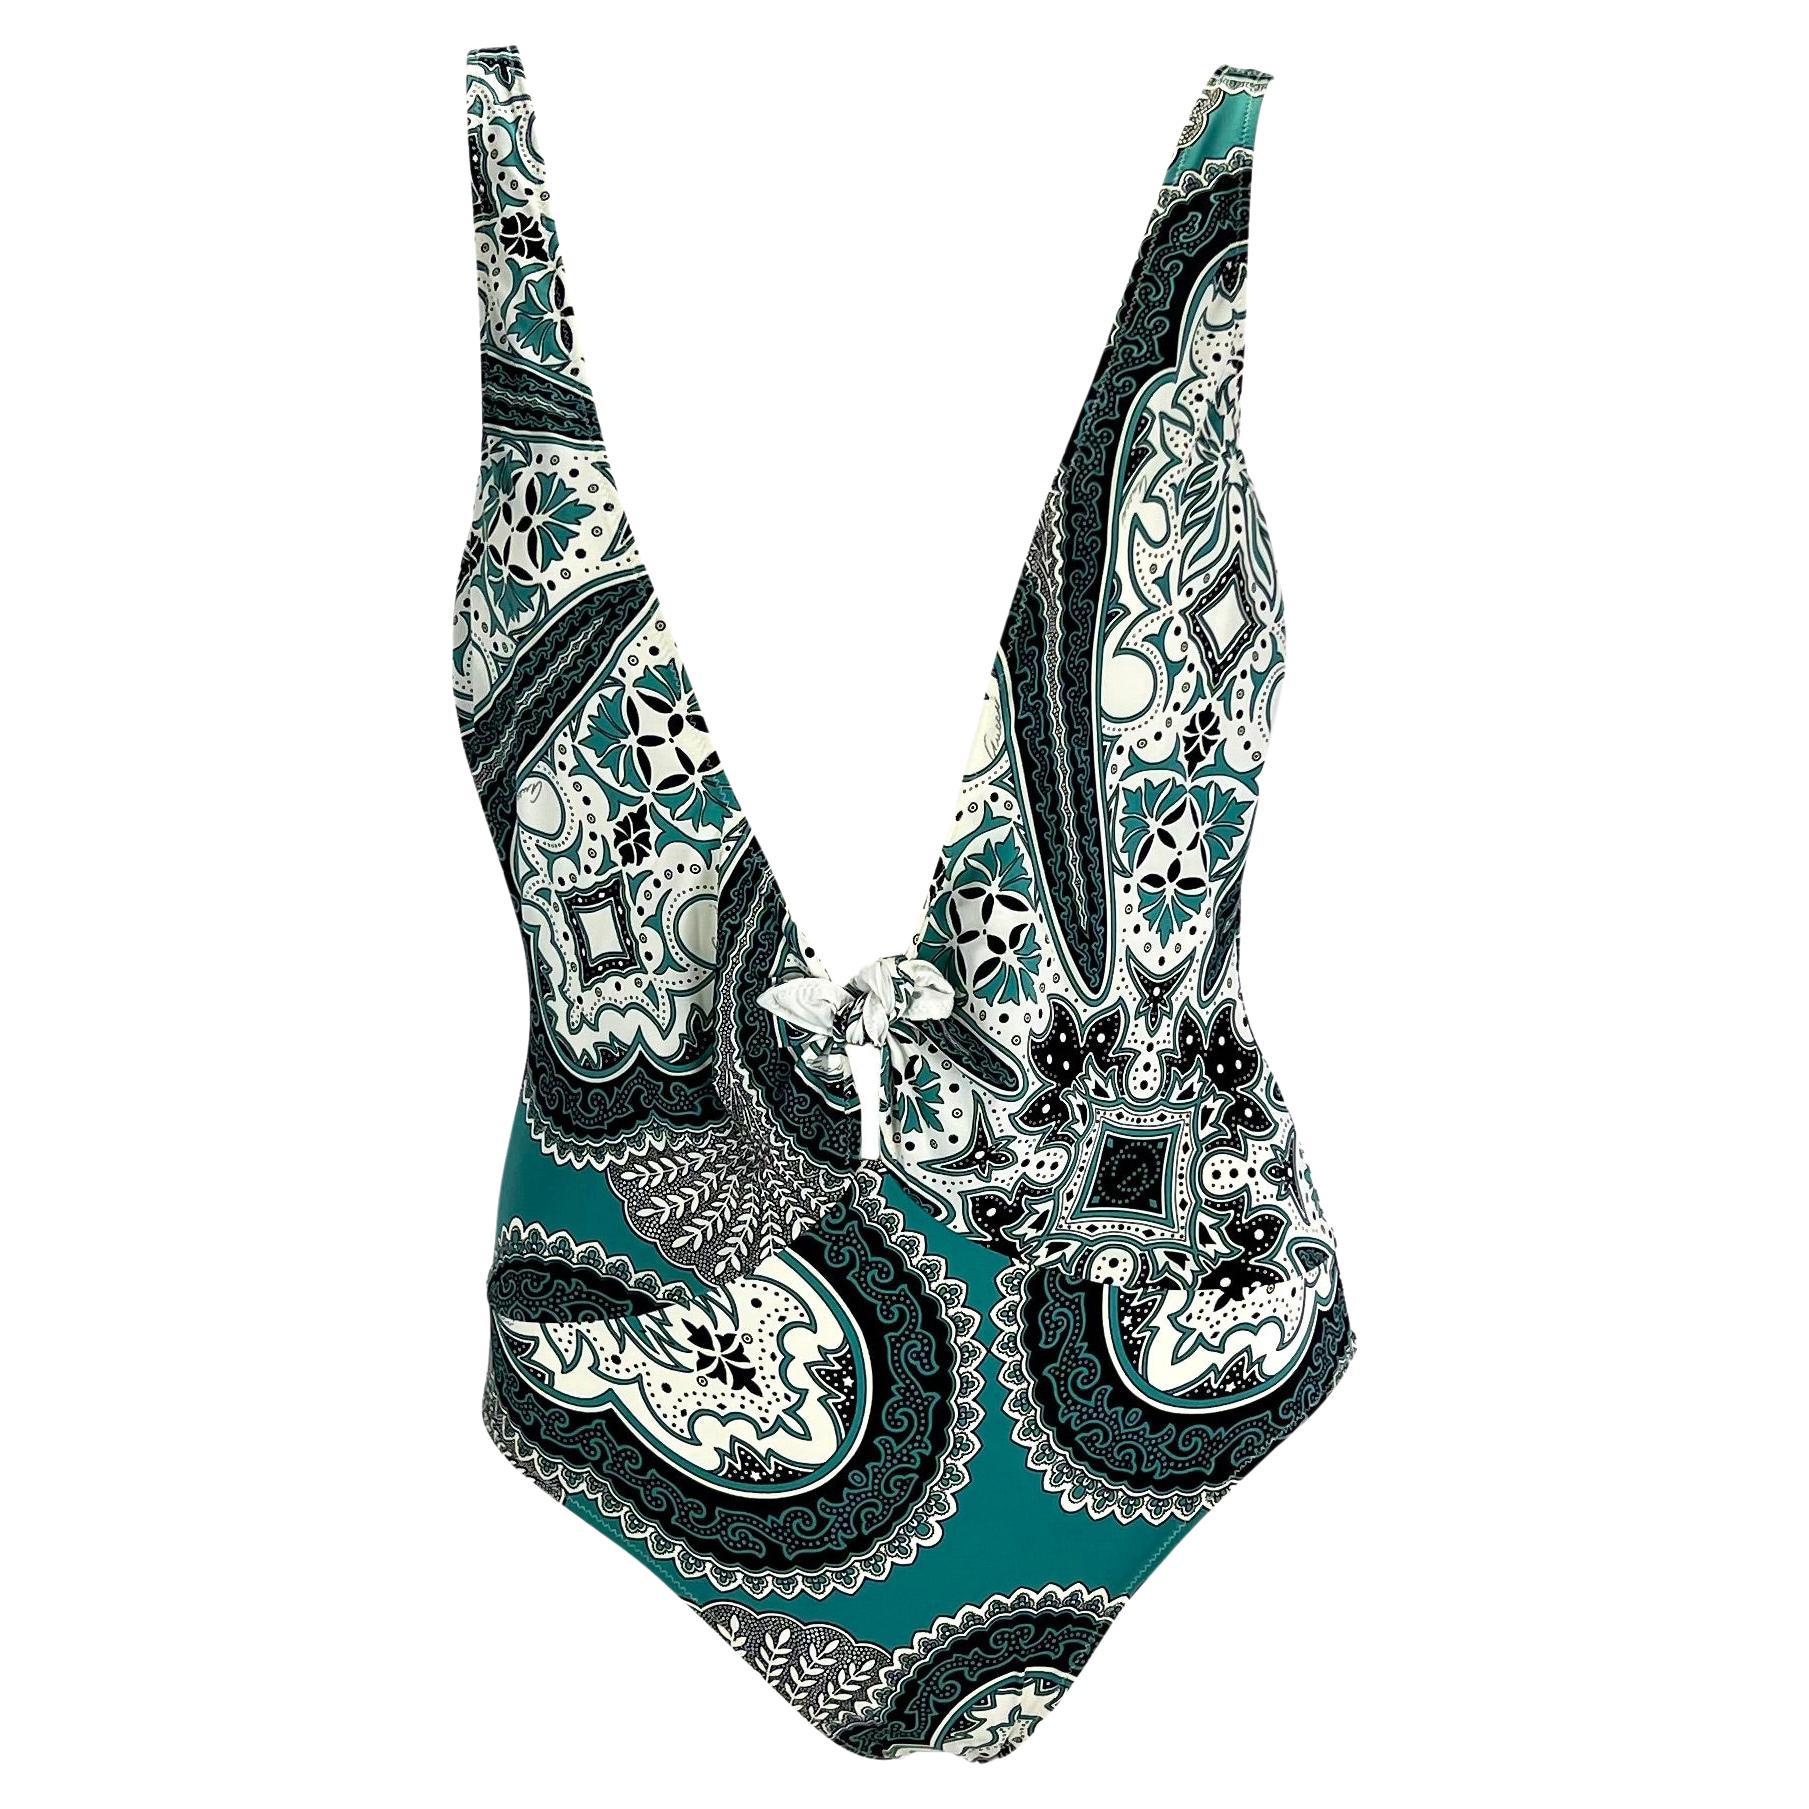 Tom Ford for Gucci S/S 1999 Strapless Bra & Bikini Two-Piece Swimwear  Swimsuit — OpulentAddict